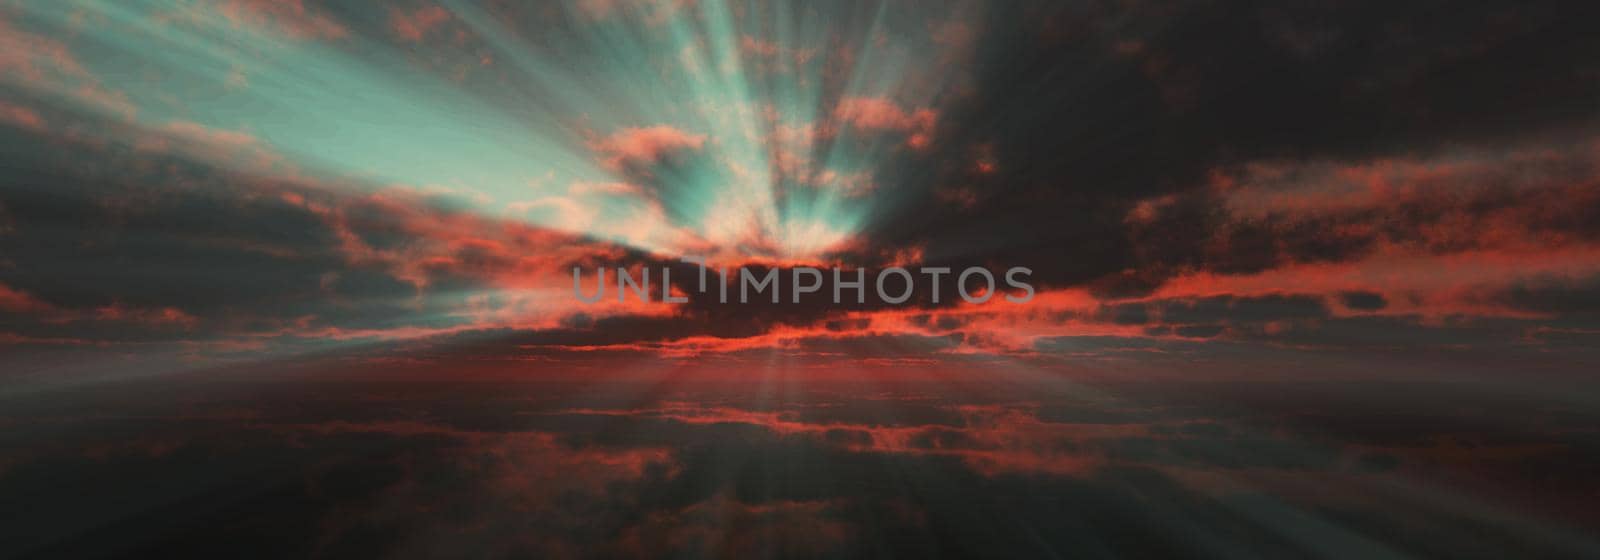 sunset calmly sea sun ray 3d render by alex_nako